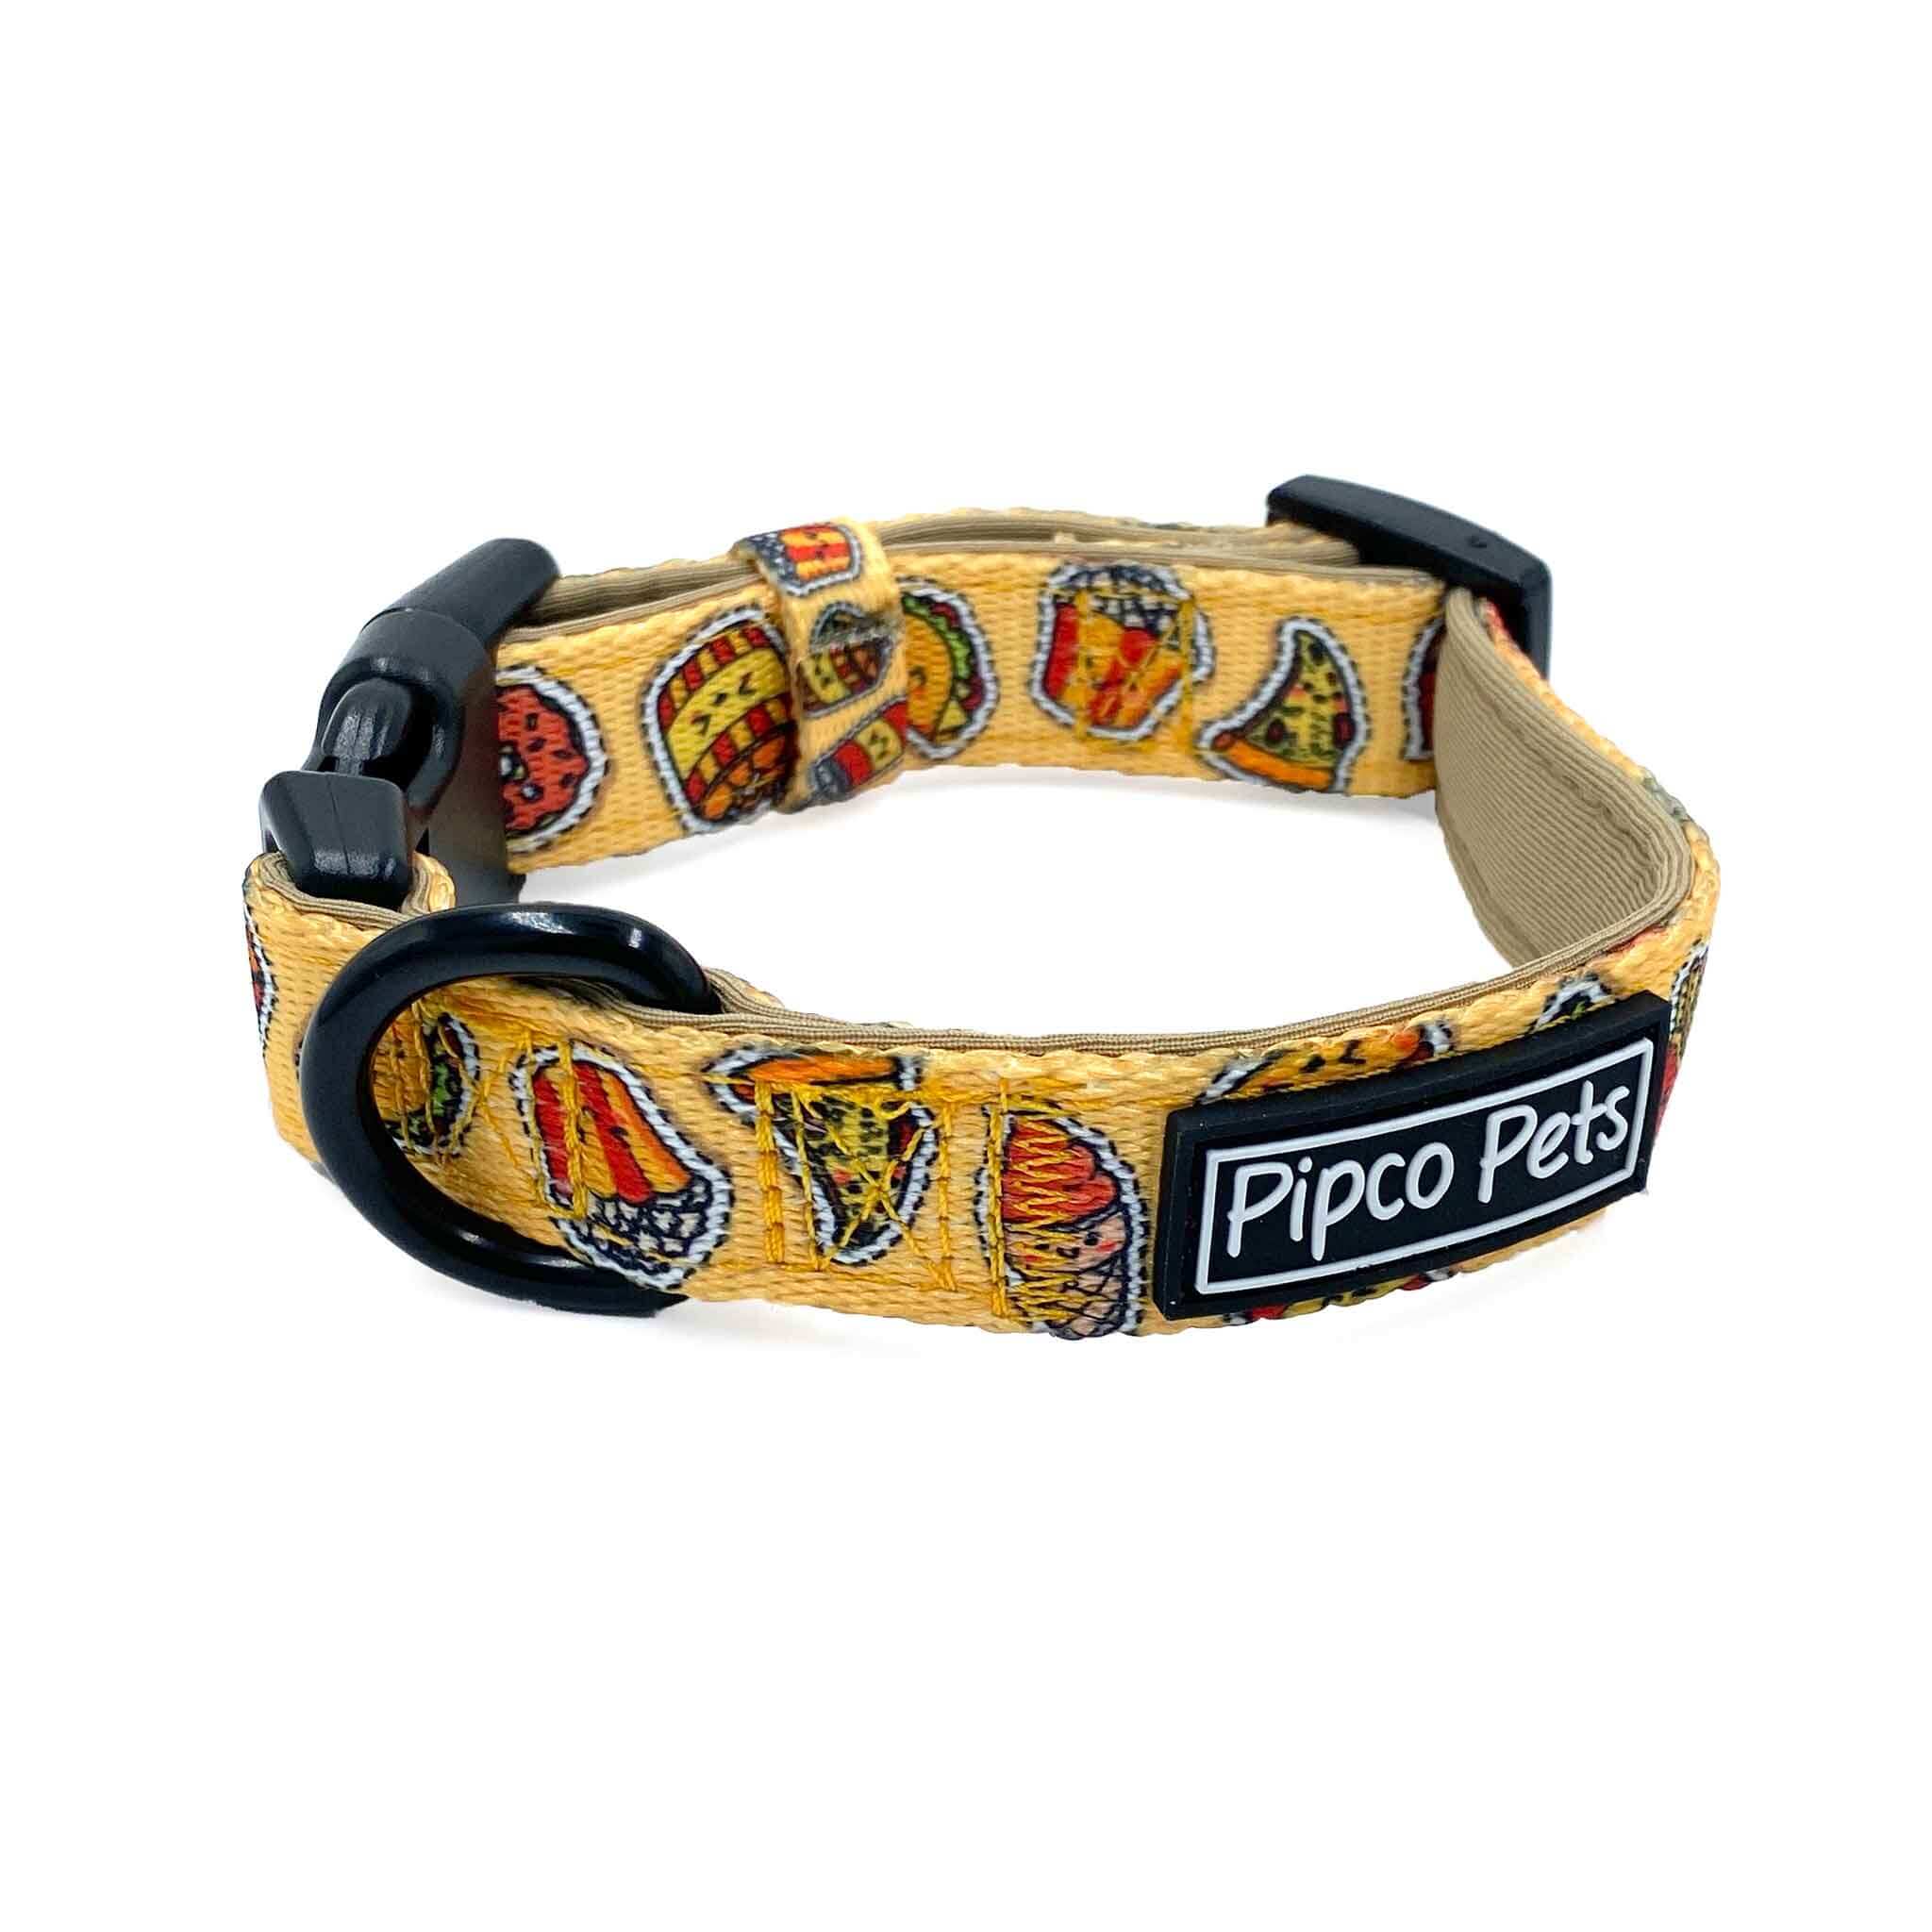 Pipco Pets dog collar with yellow Snacks print